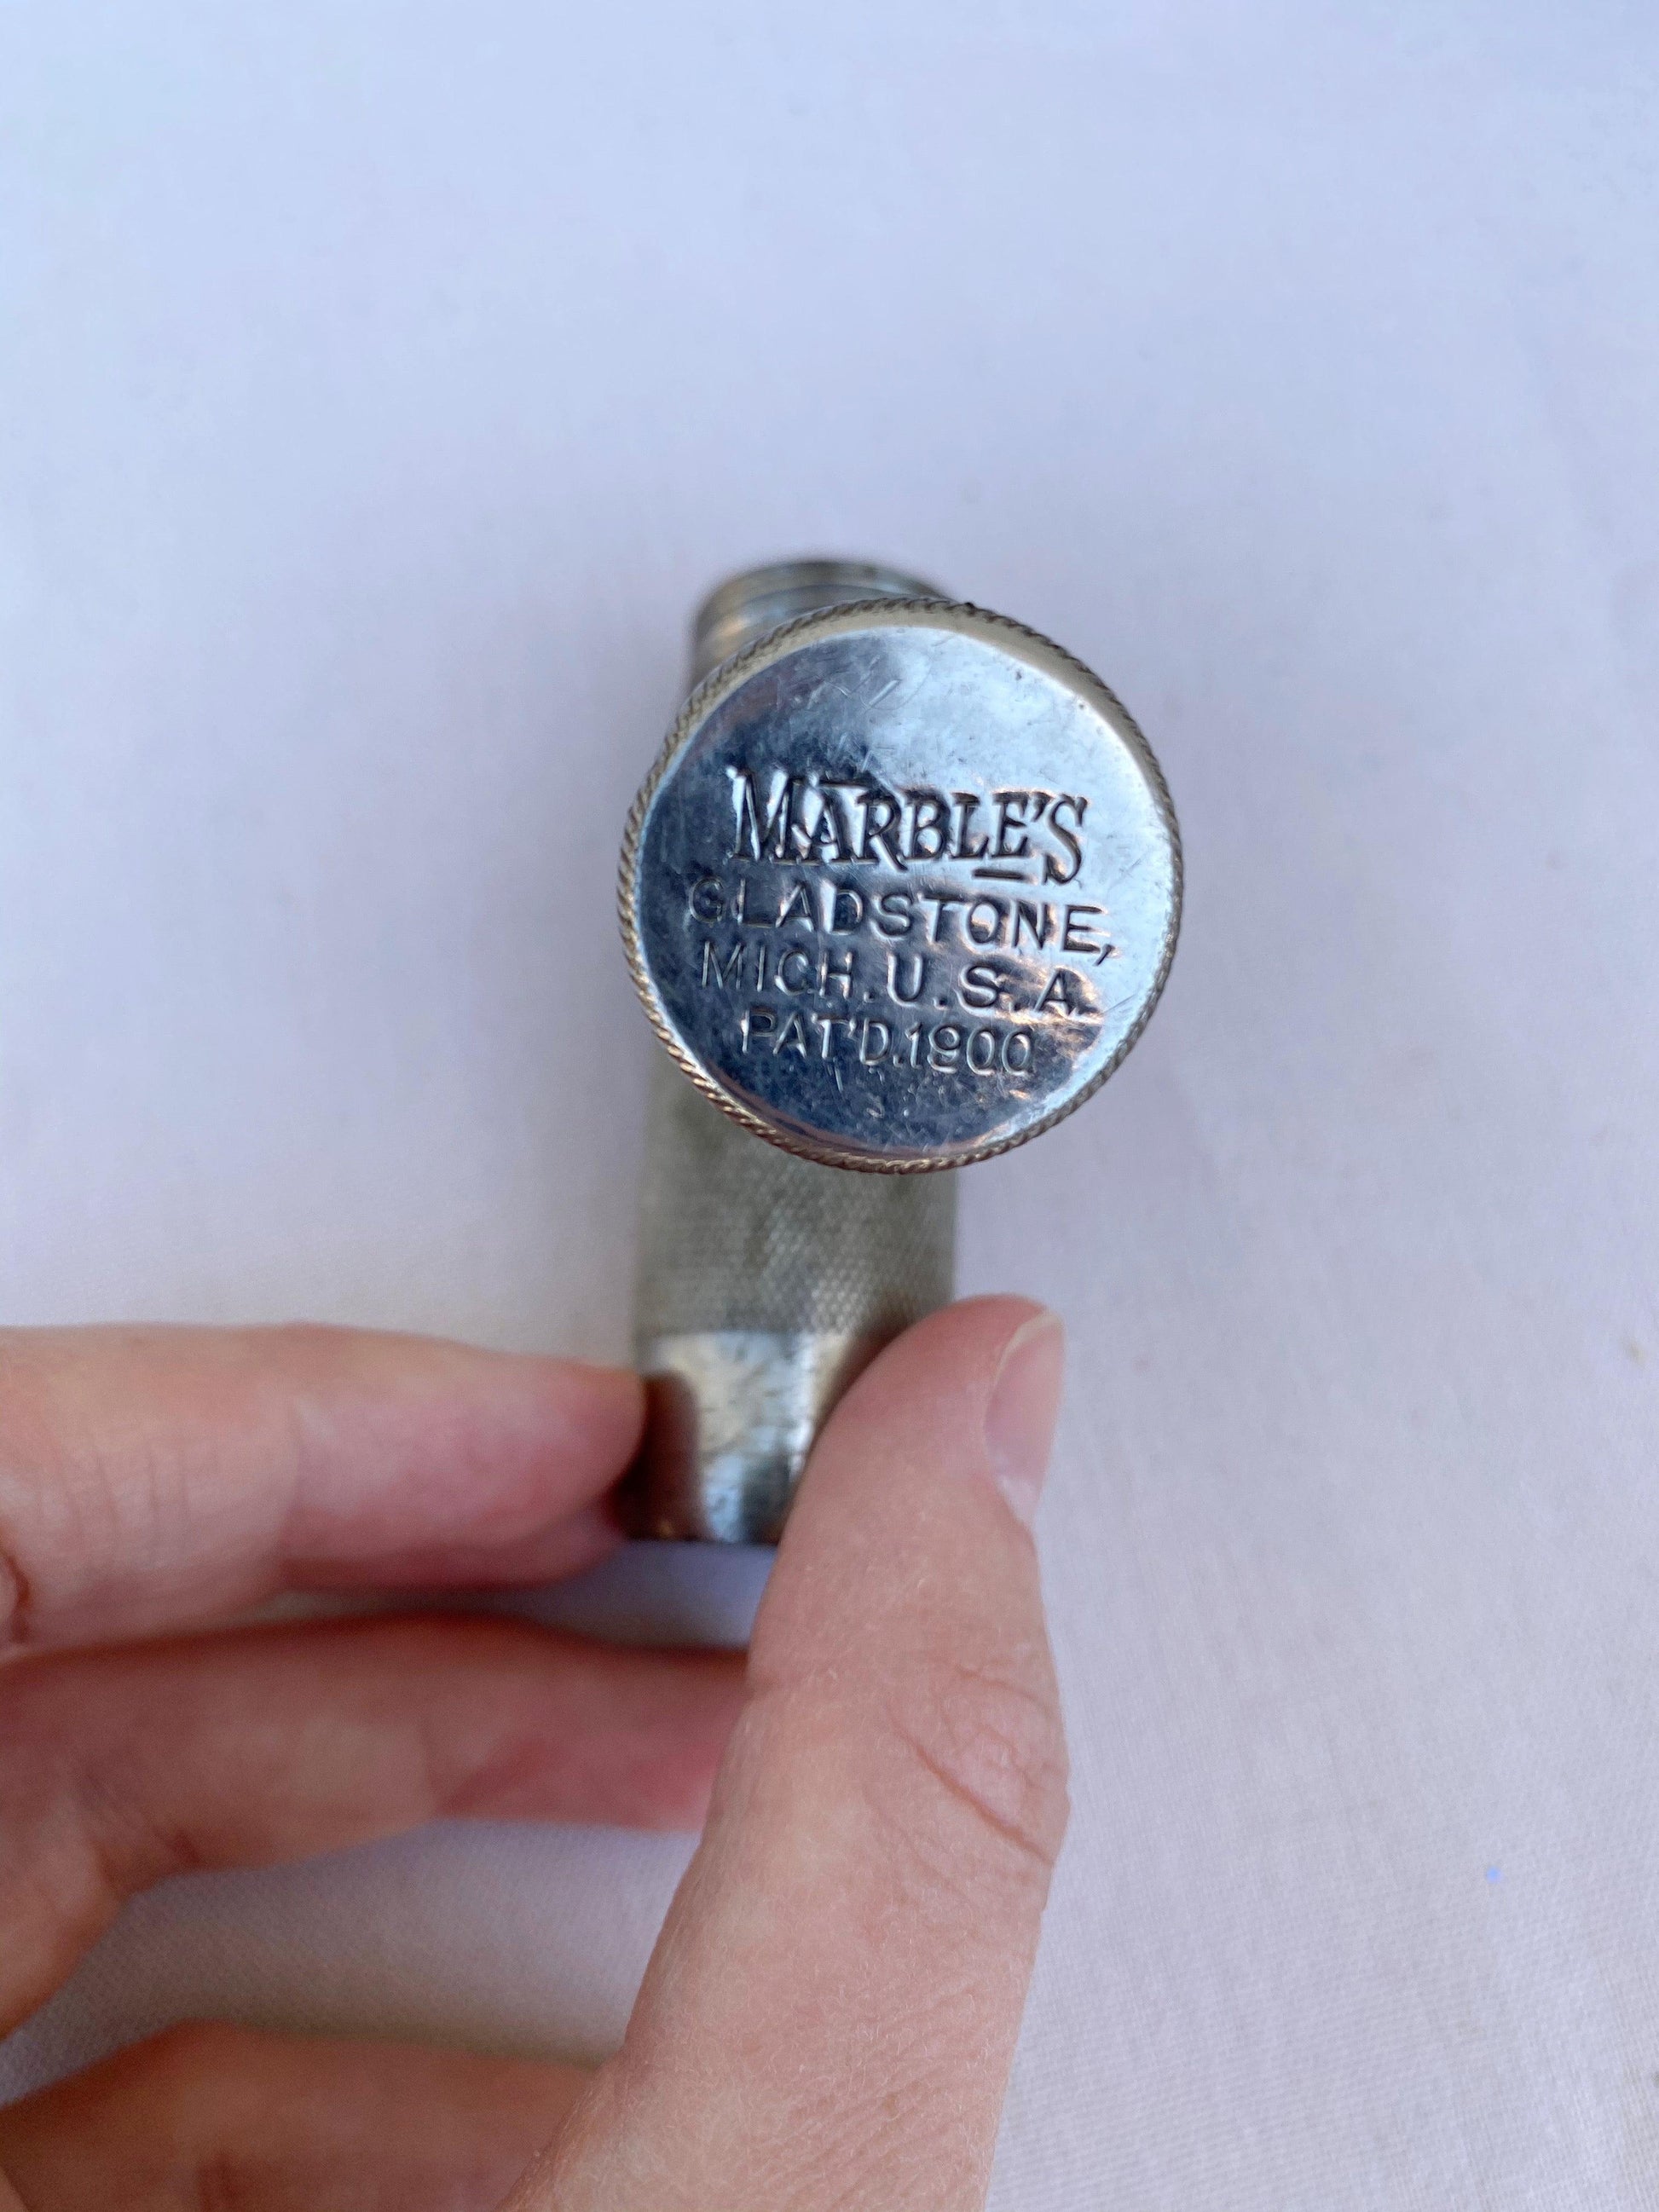 1900s Antique Match Case, "Marble's" by Gladstone, Michigan - A Walk Thru Time Vintage